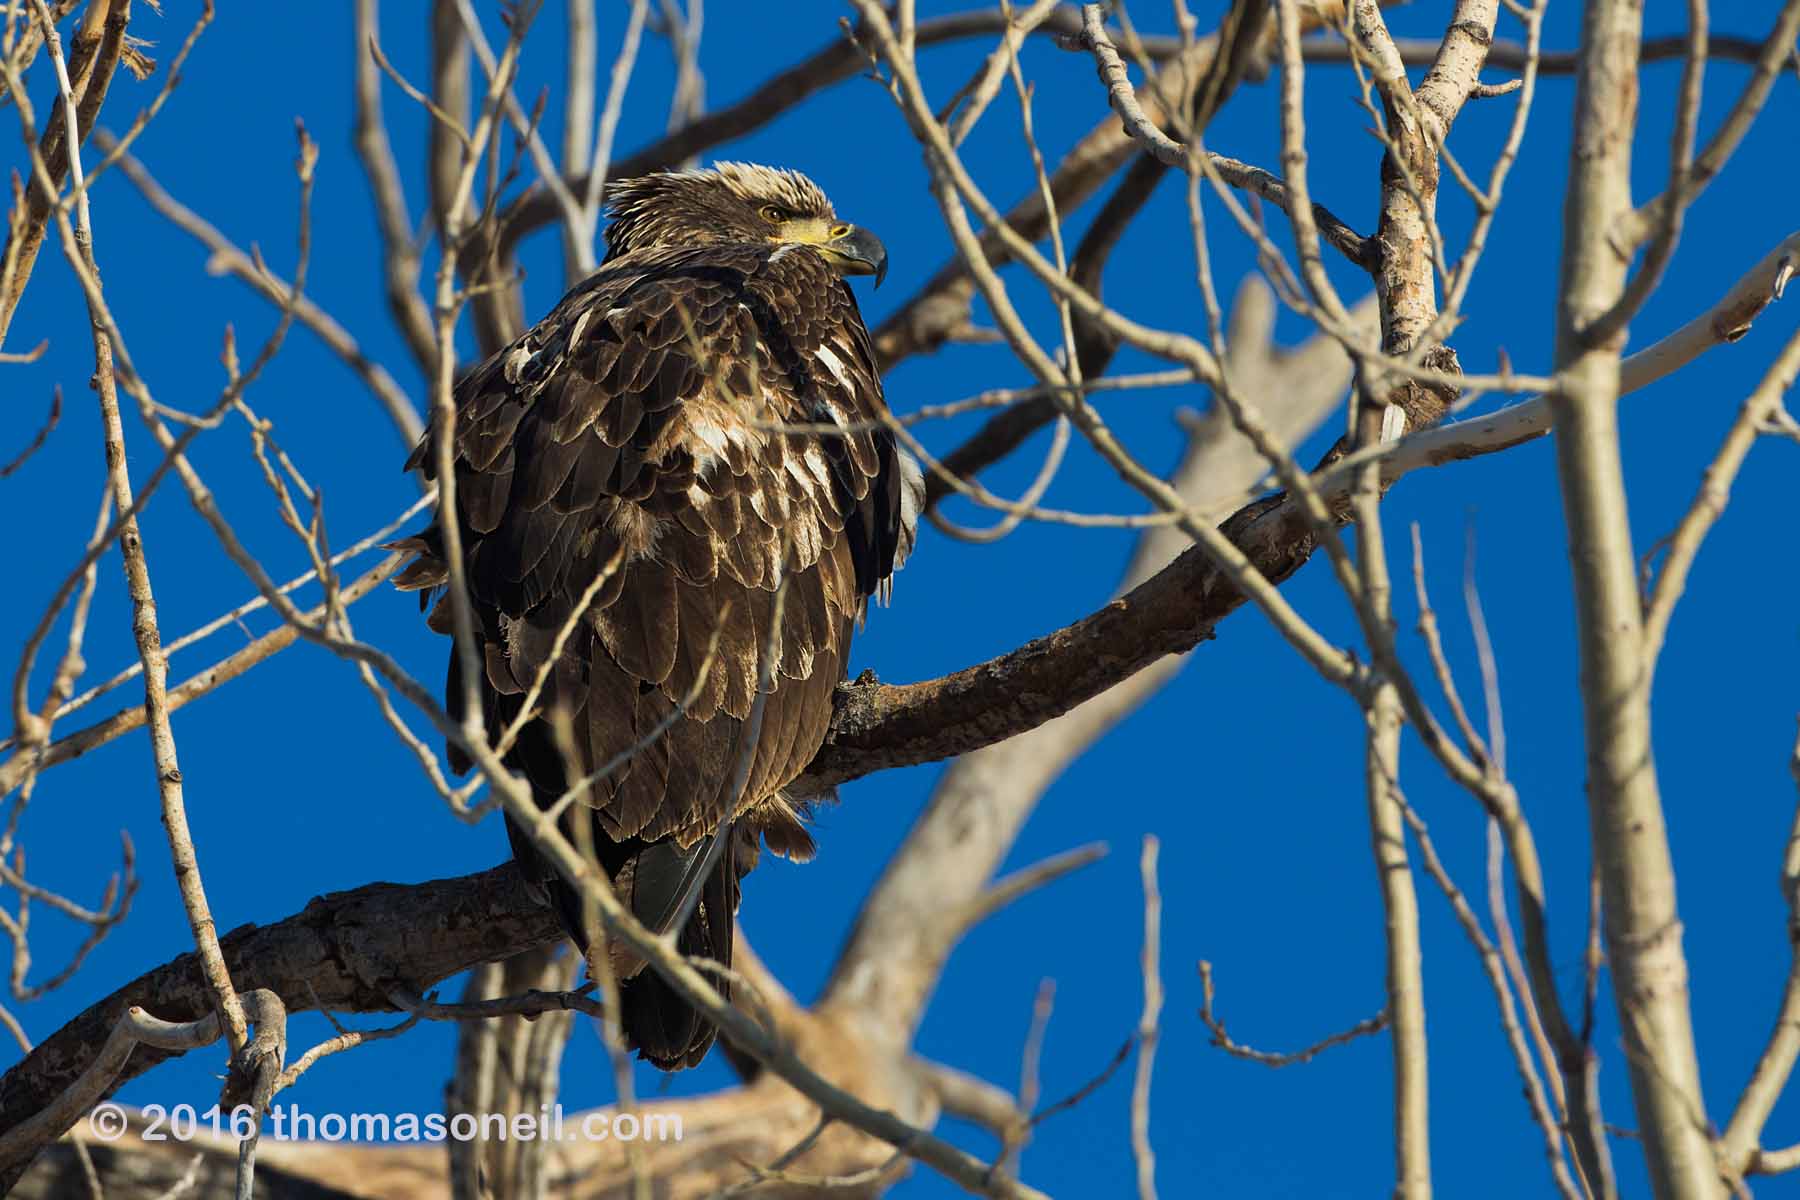 Juvenile Bald eagle, Squaw Creek National Wildlife Refuge, Missouri.  Click for next photo.